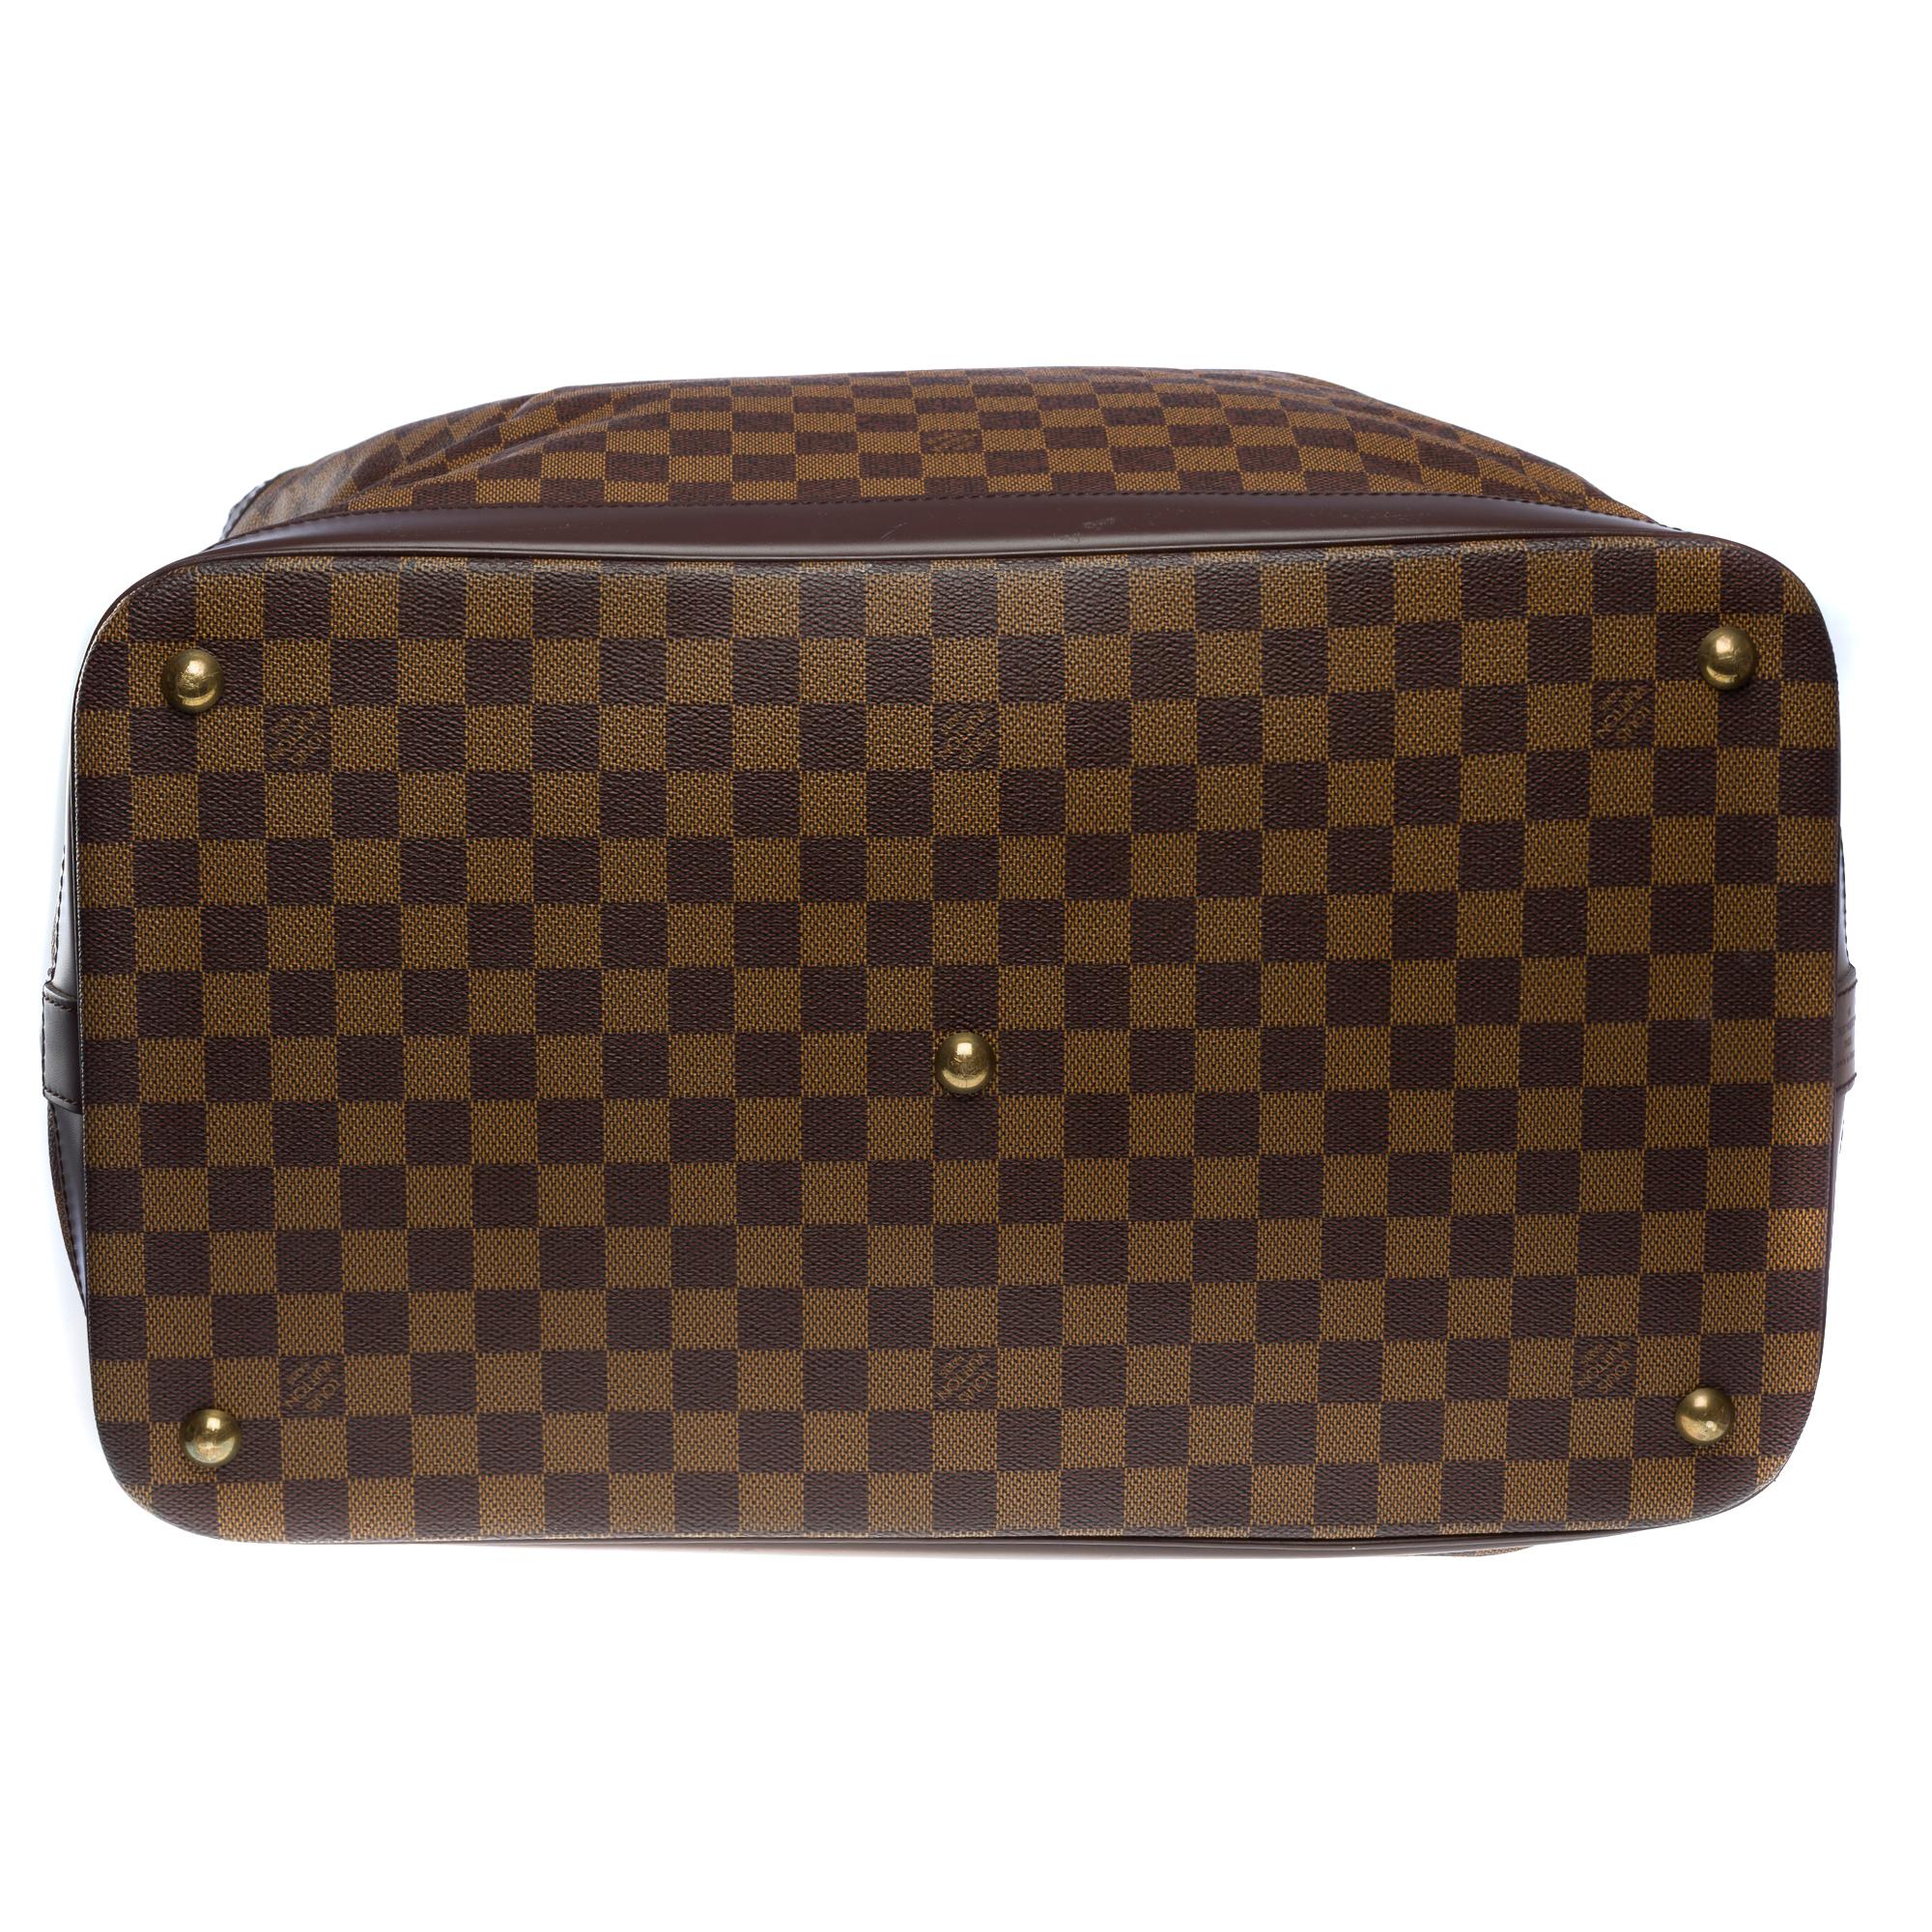 Rare Louis Vuitton Cruiser 45 Travel bag in brown checkered Monogram canvas, GHW 5